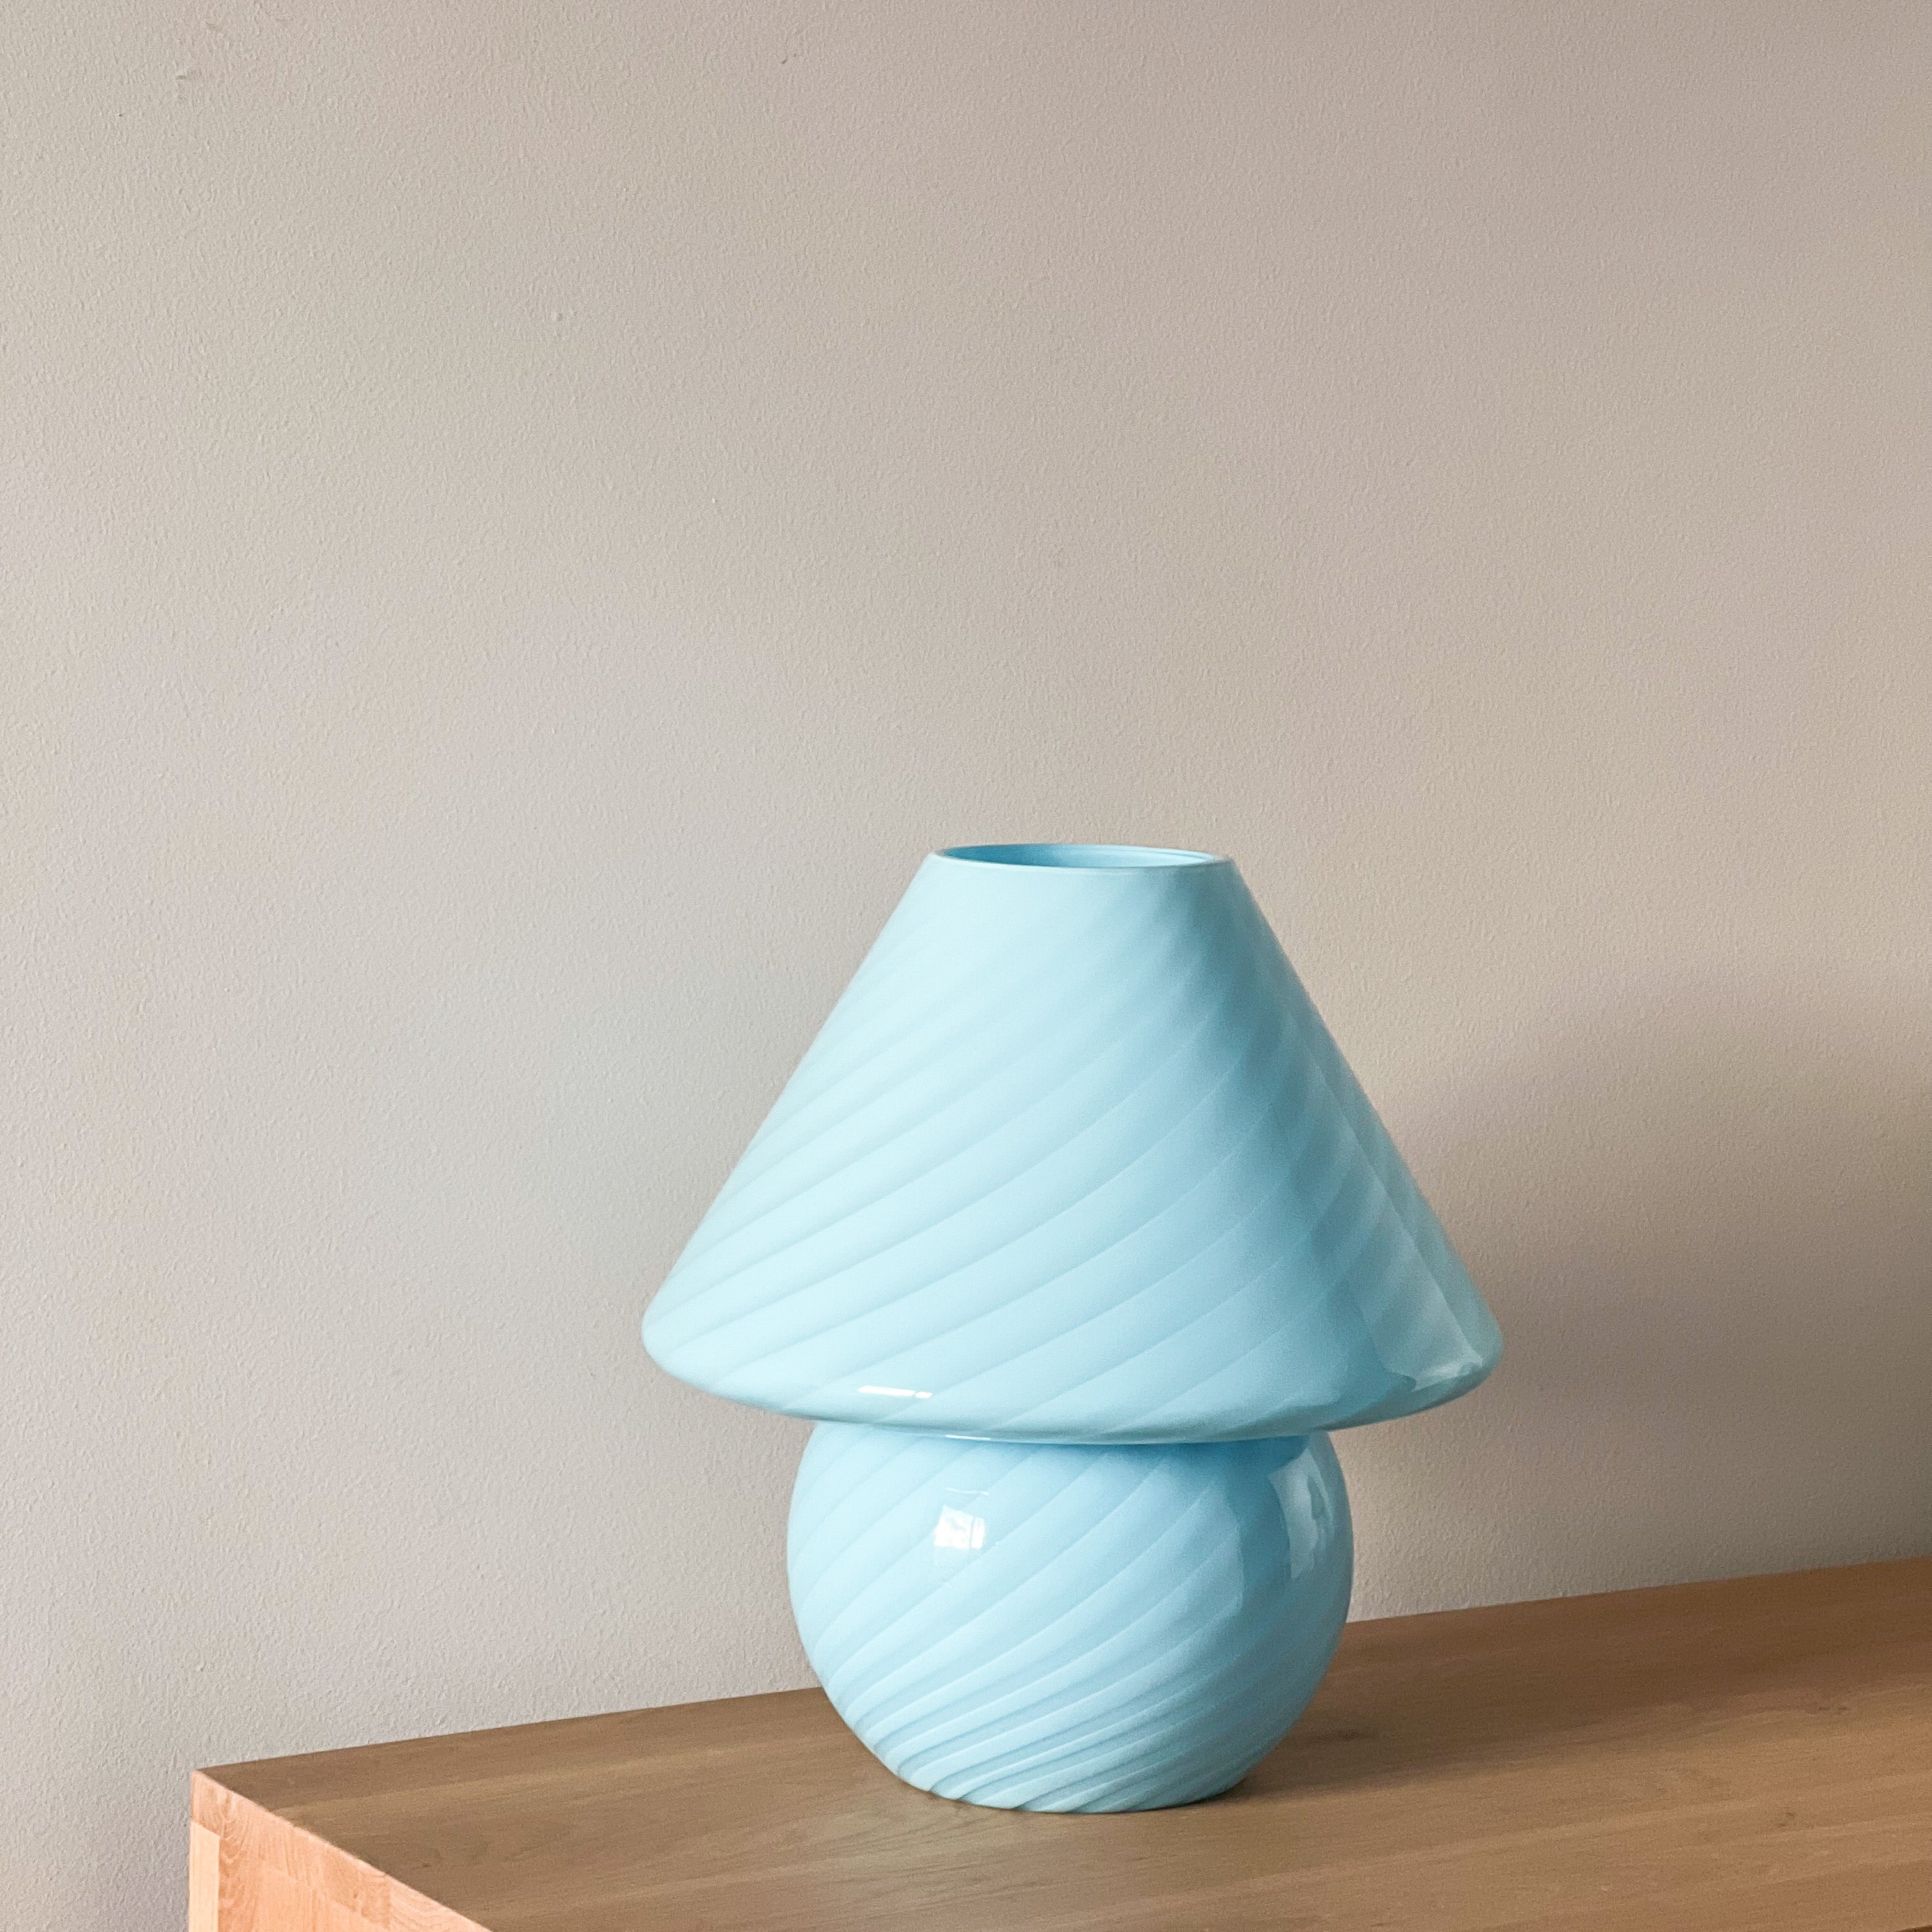 XL Blue Mushroom Lamp